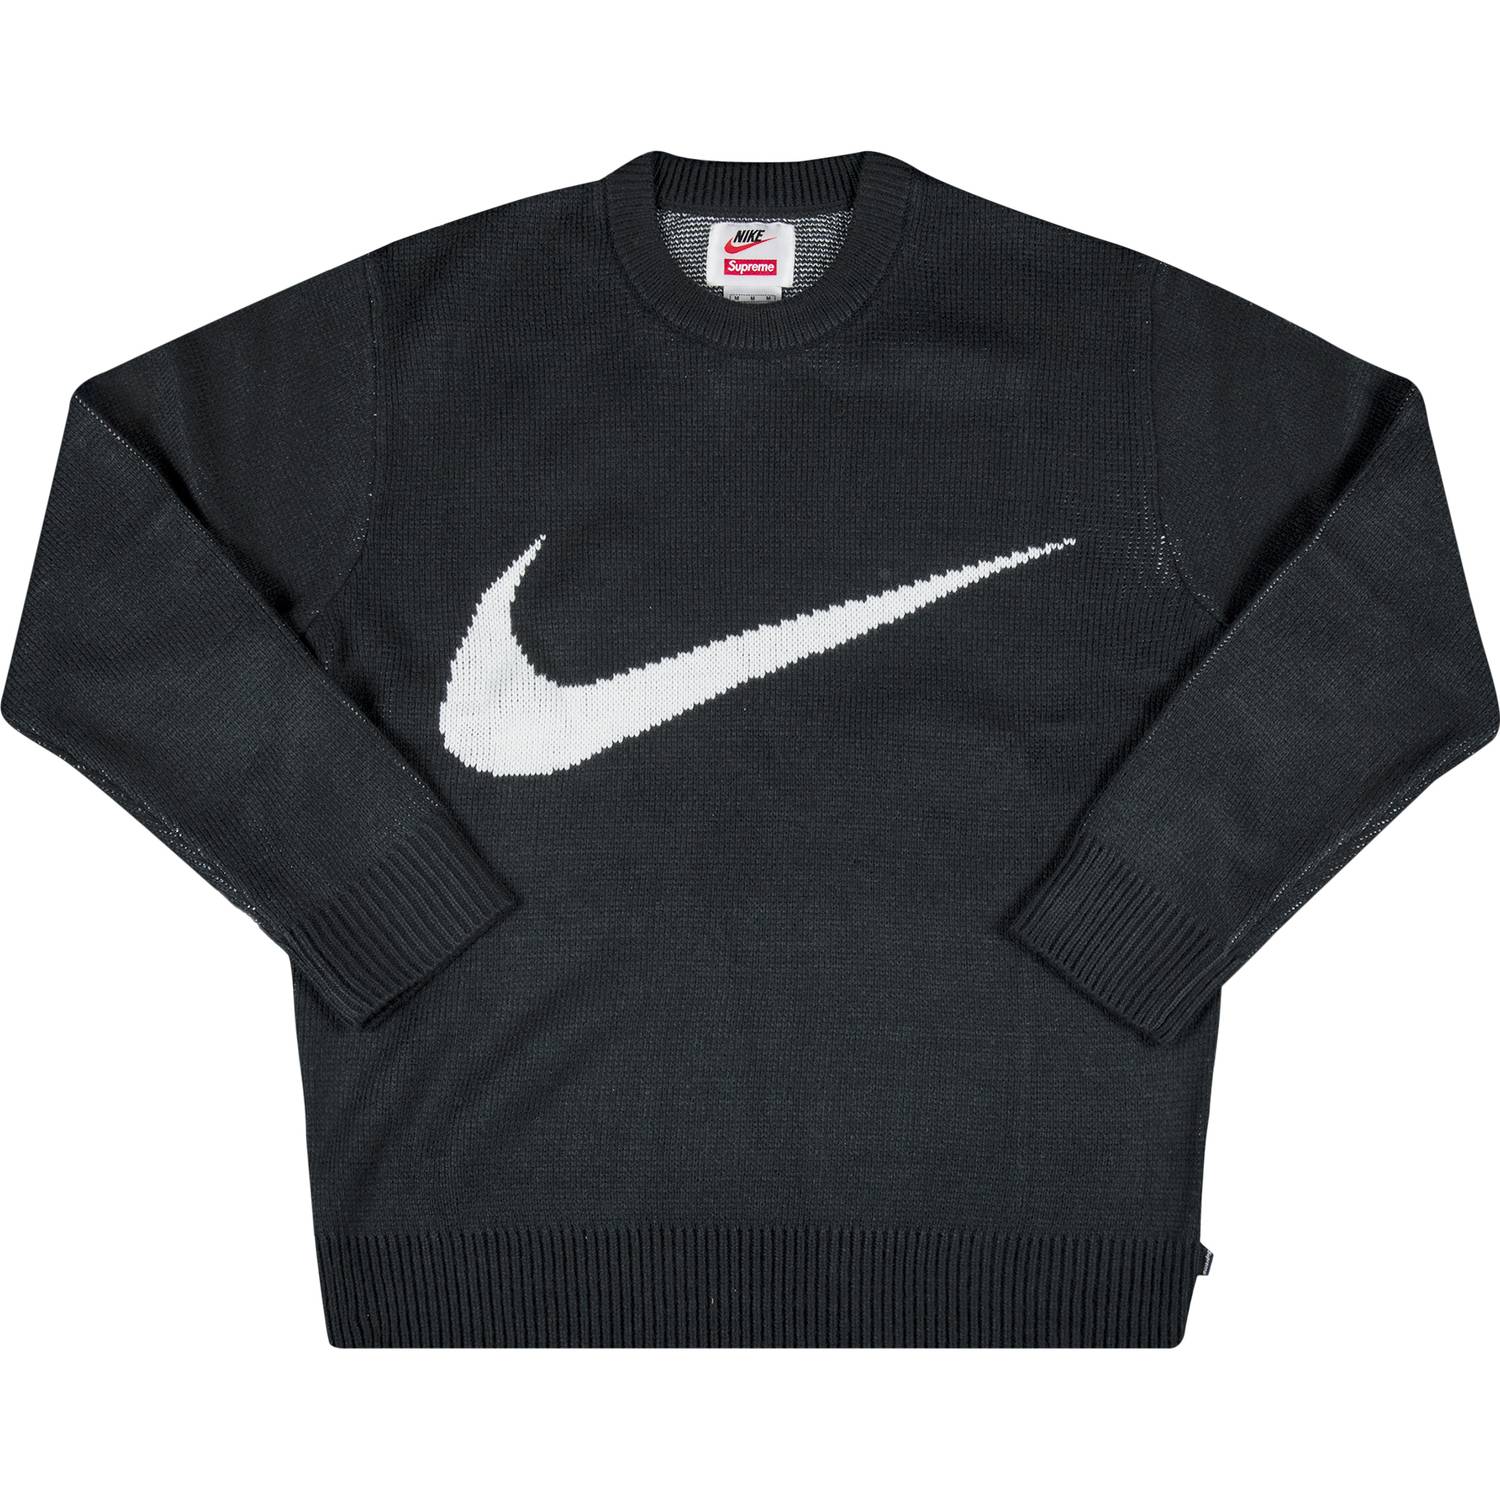 Supreme x Nike Swoosh Sweater 'Black' - Supreme - SS19SK2 BLACK | GOAT